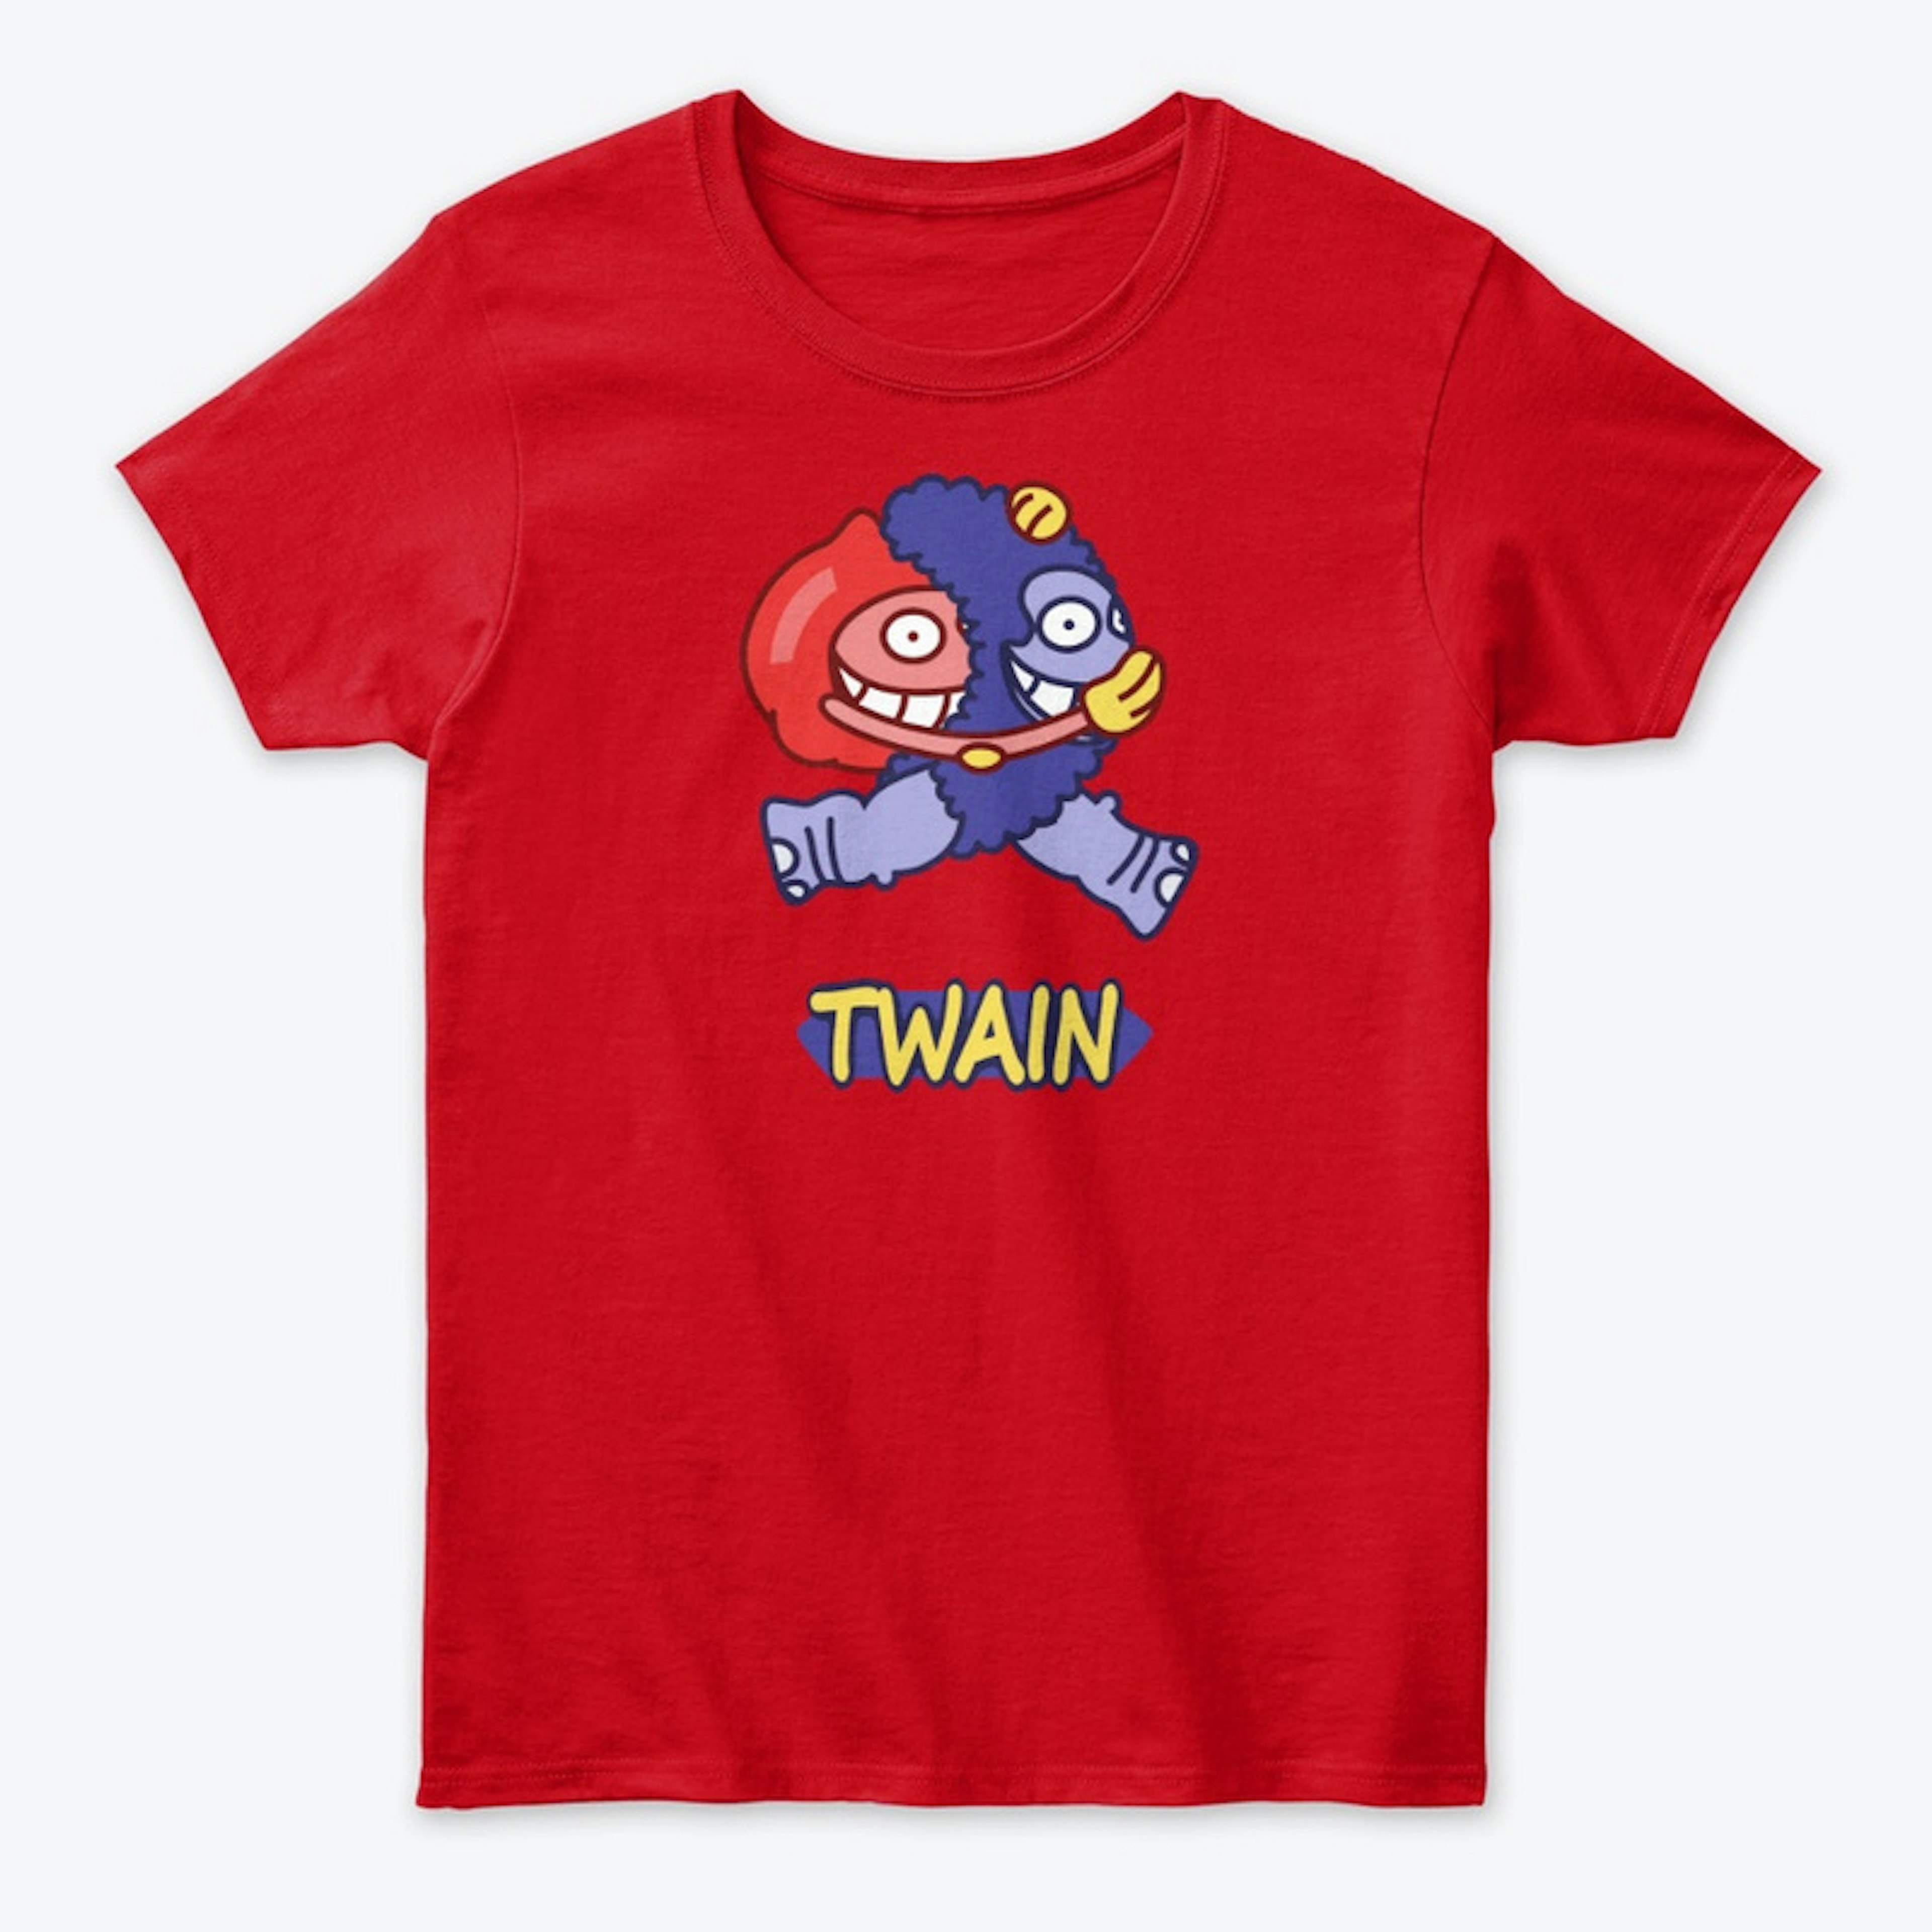 Twain shirt + Logo on back